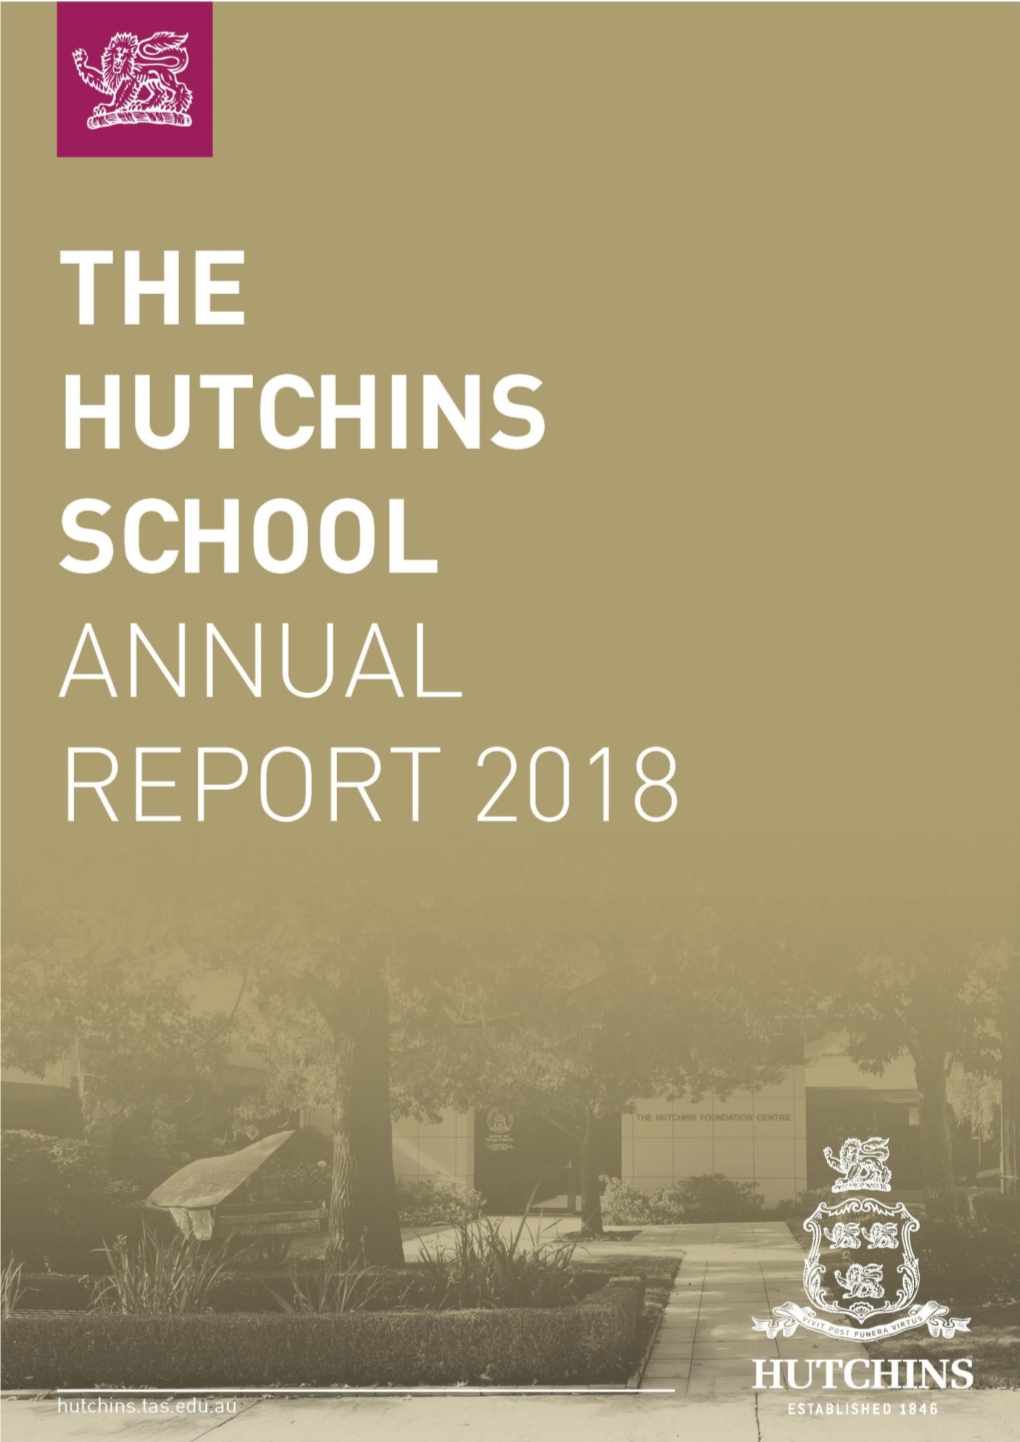 The Hutchins School Annual Report 2018